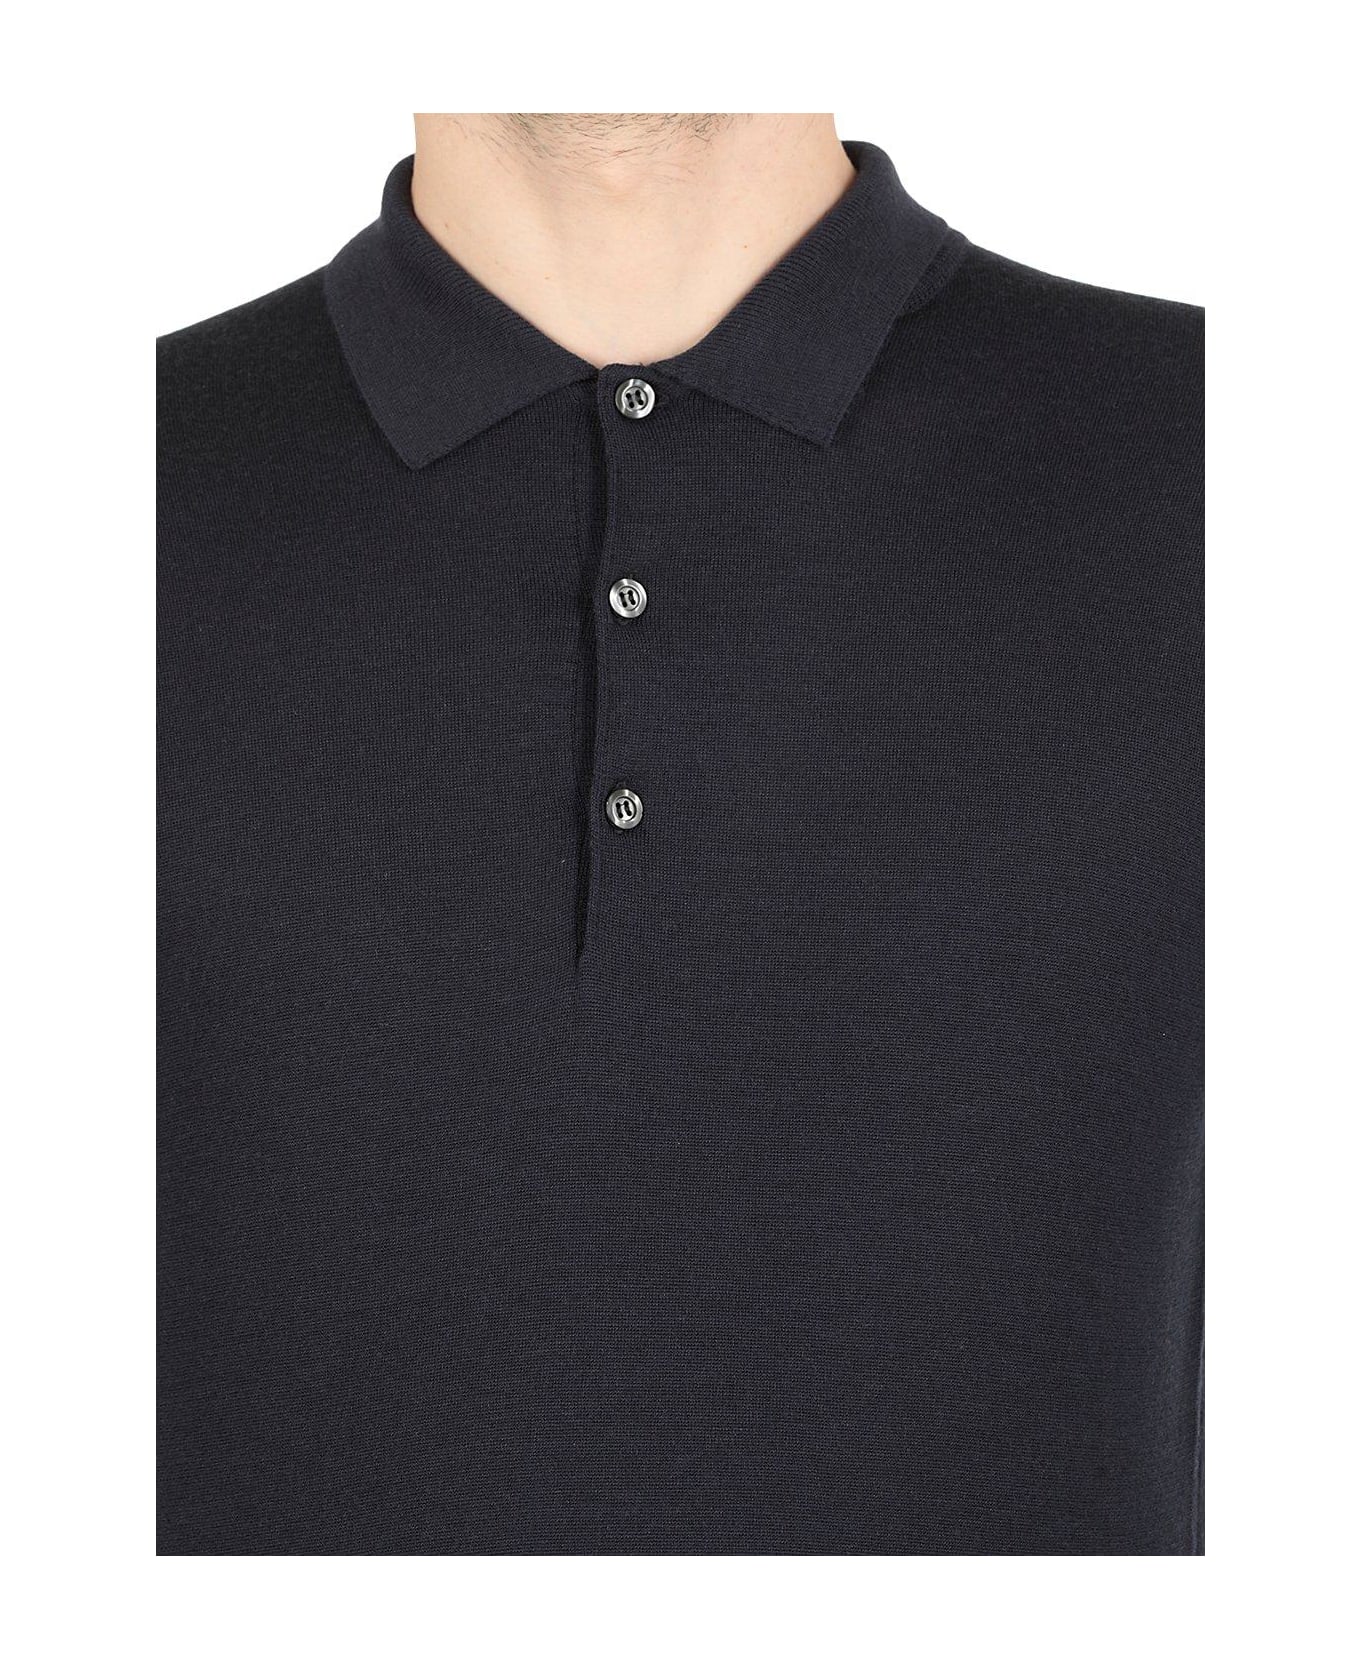 John Smedley Belper Buttoned Knitted Polo Shirt - Midnigt シャツ